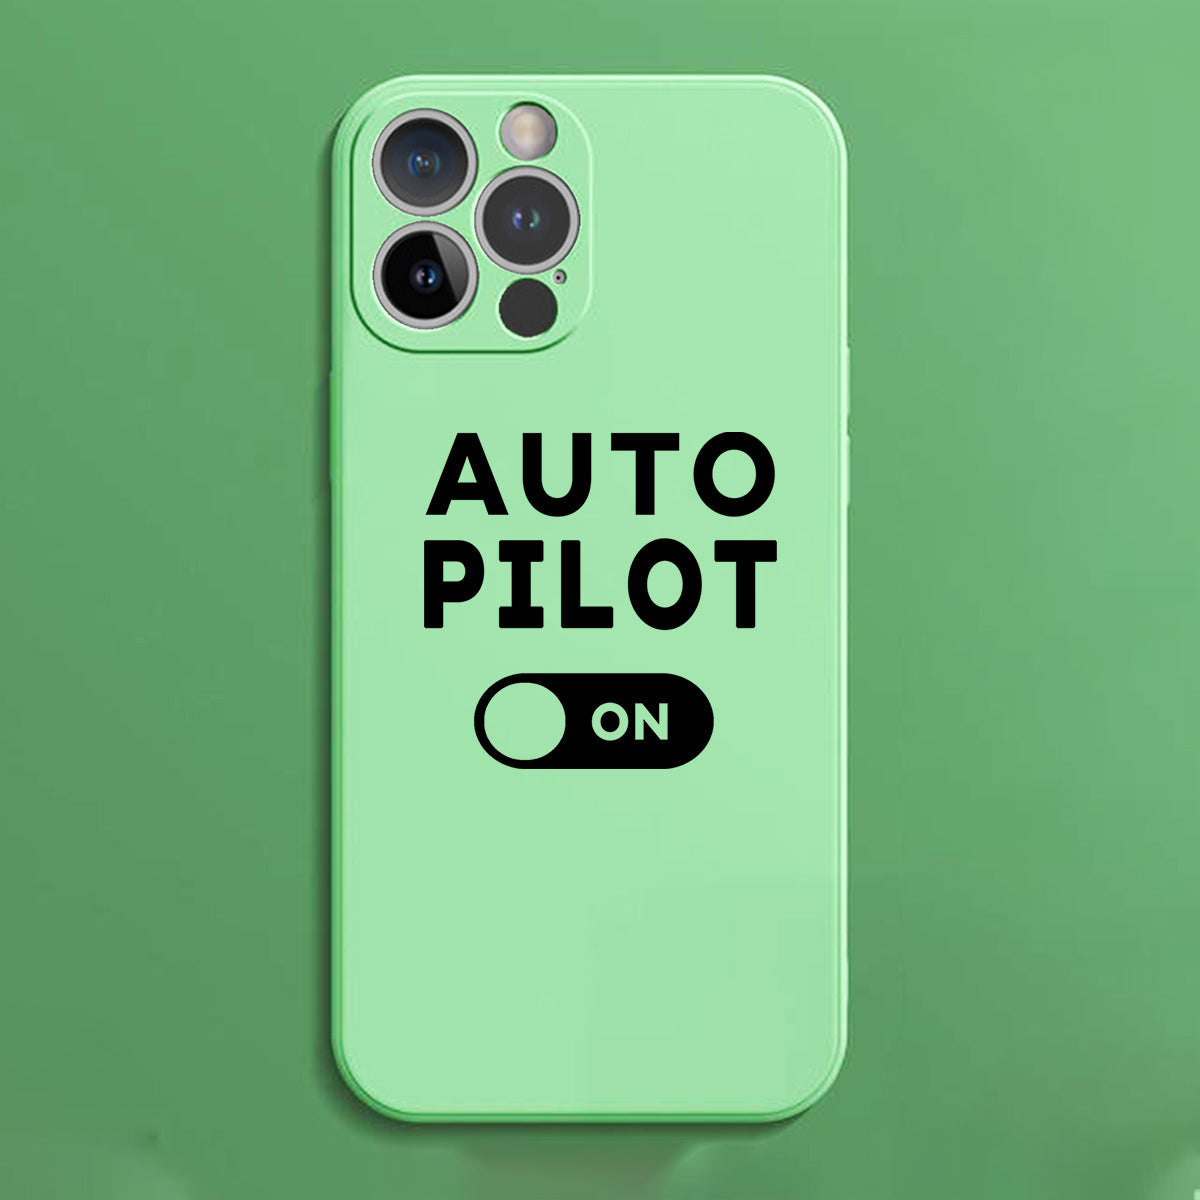 Auto Pilot ON Designed Soft Silicone iPhone Cases